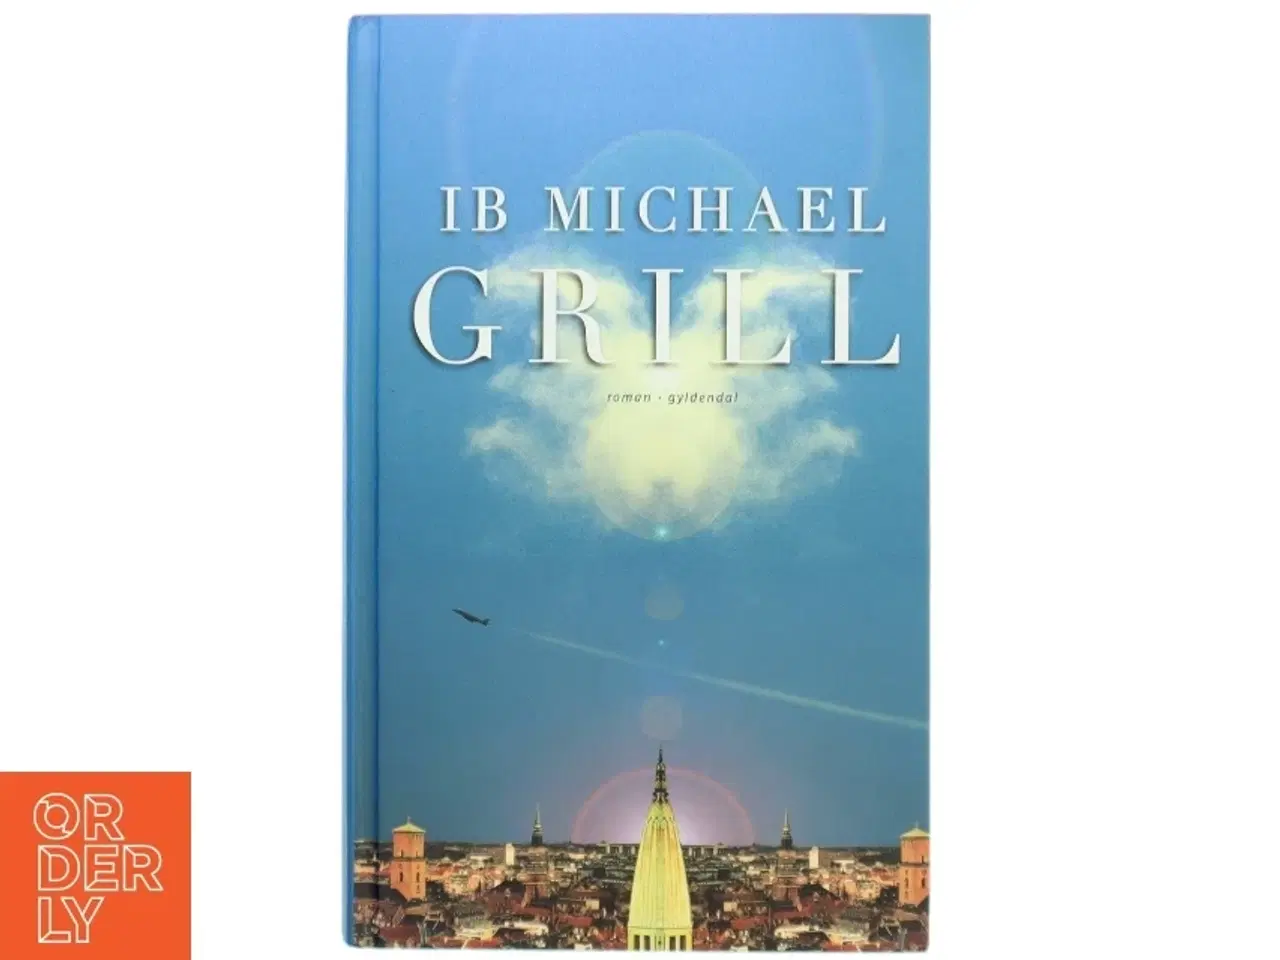 Billede 1 - Grill : roman af Ib Michael (Bog)